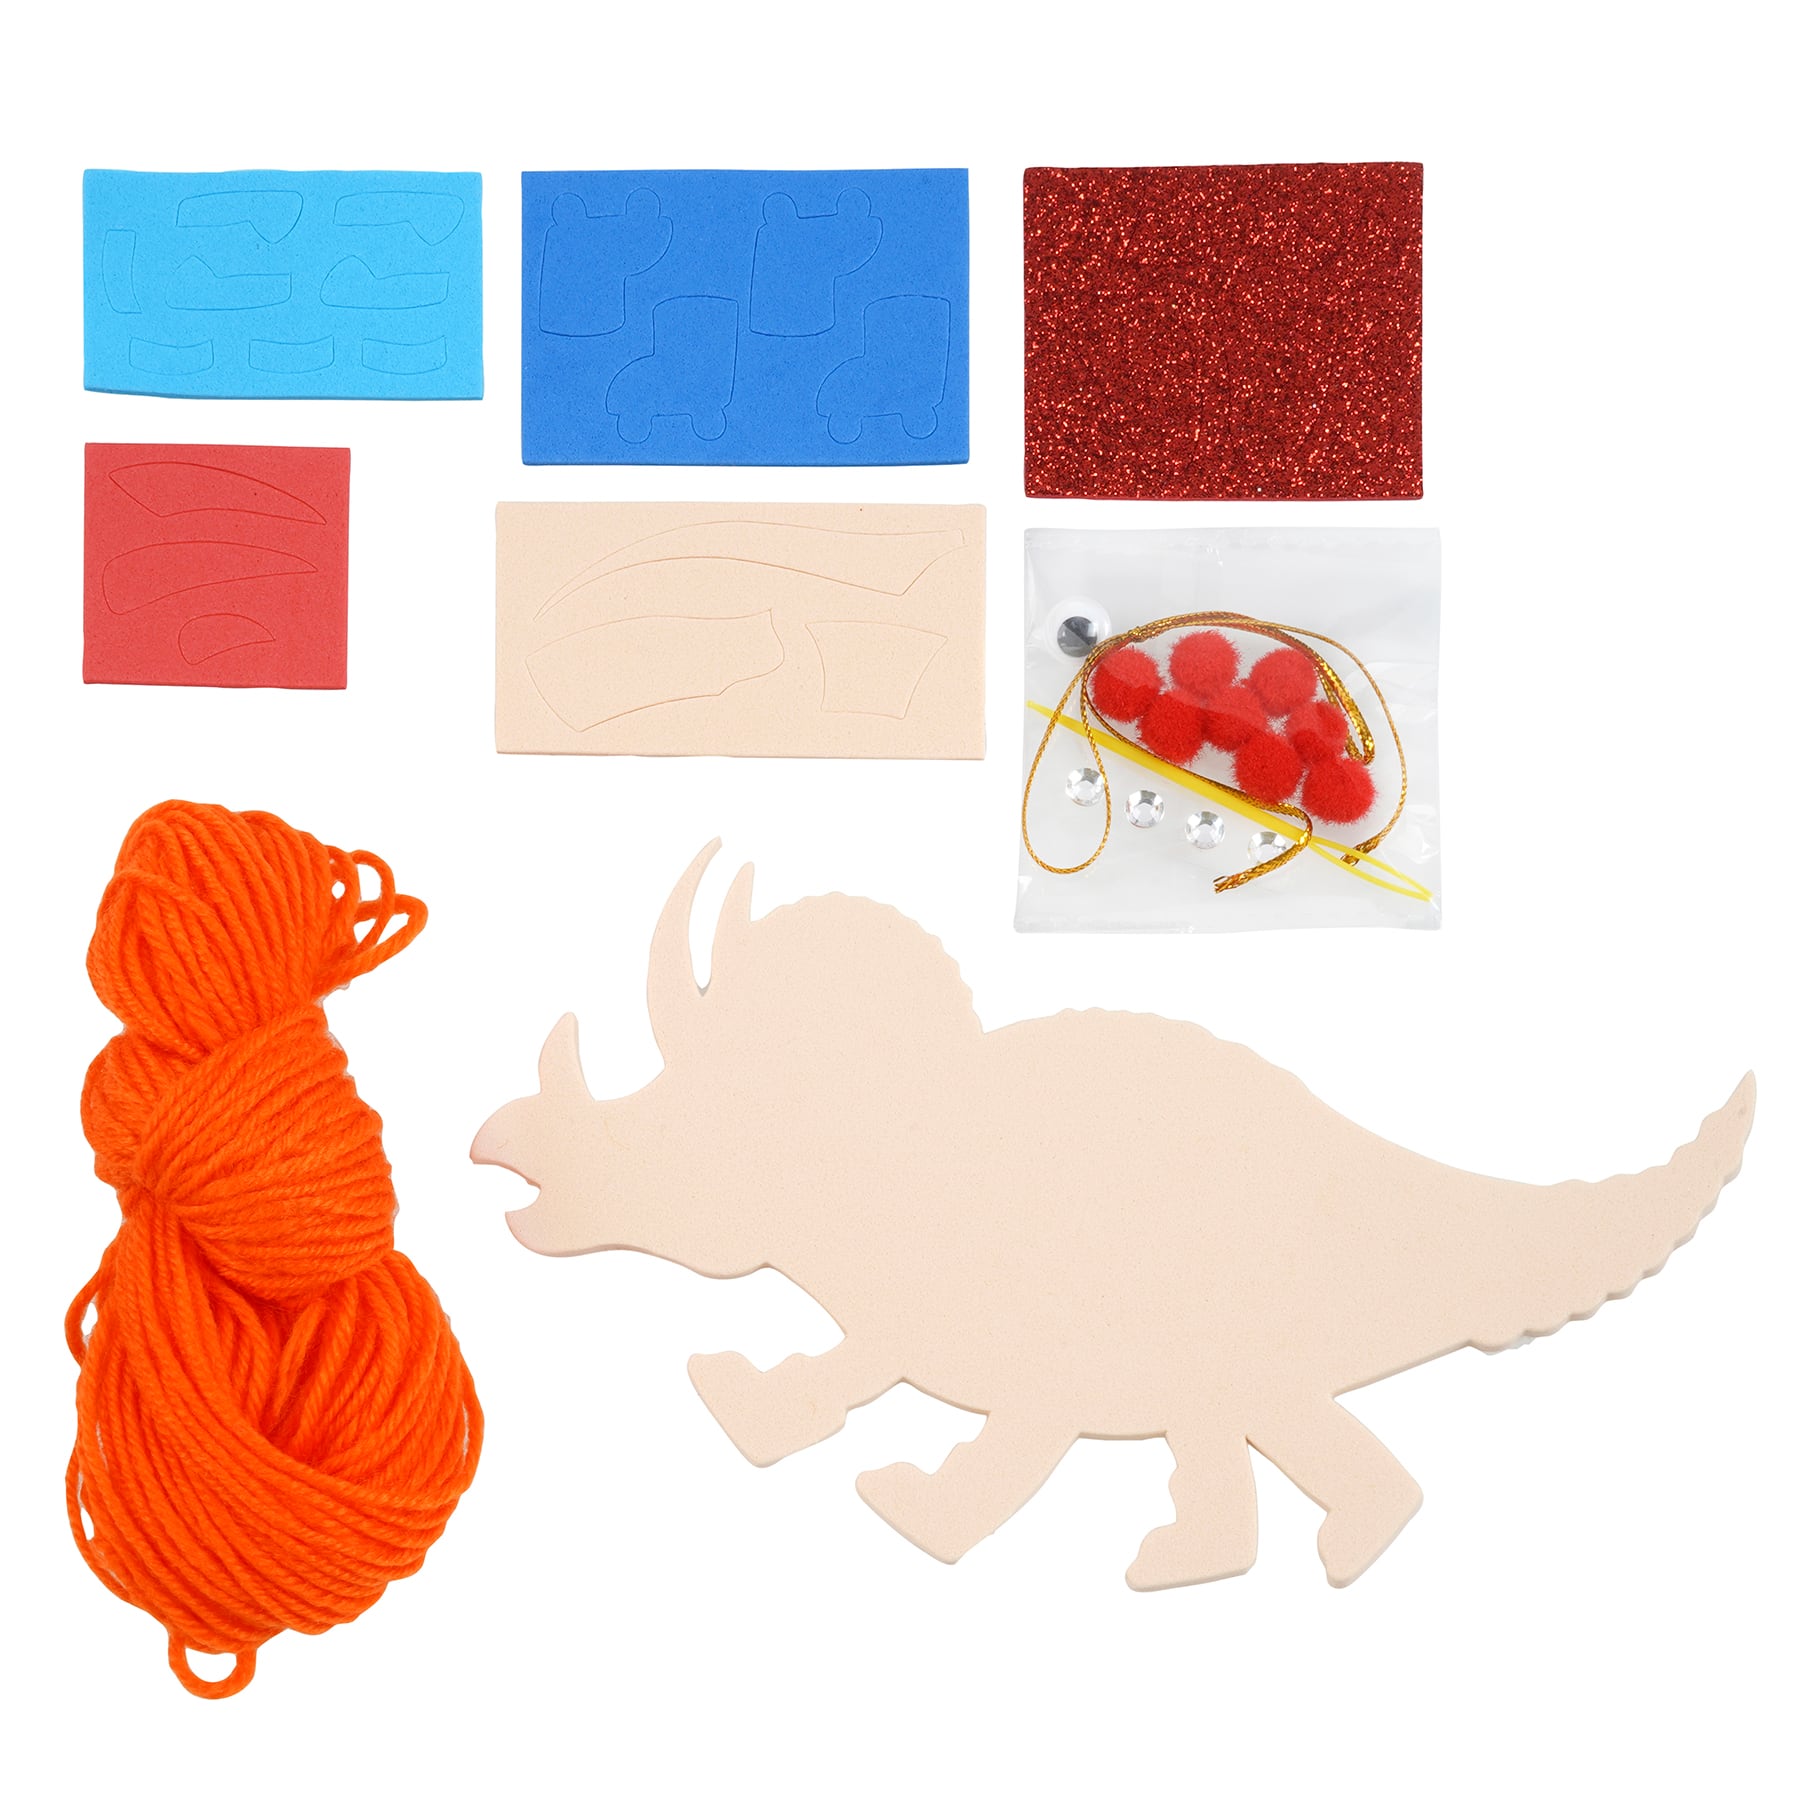 Dinosaur Yarn Wrapping Kit by Creatology&#x2122;